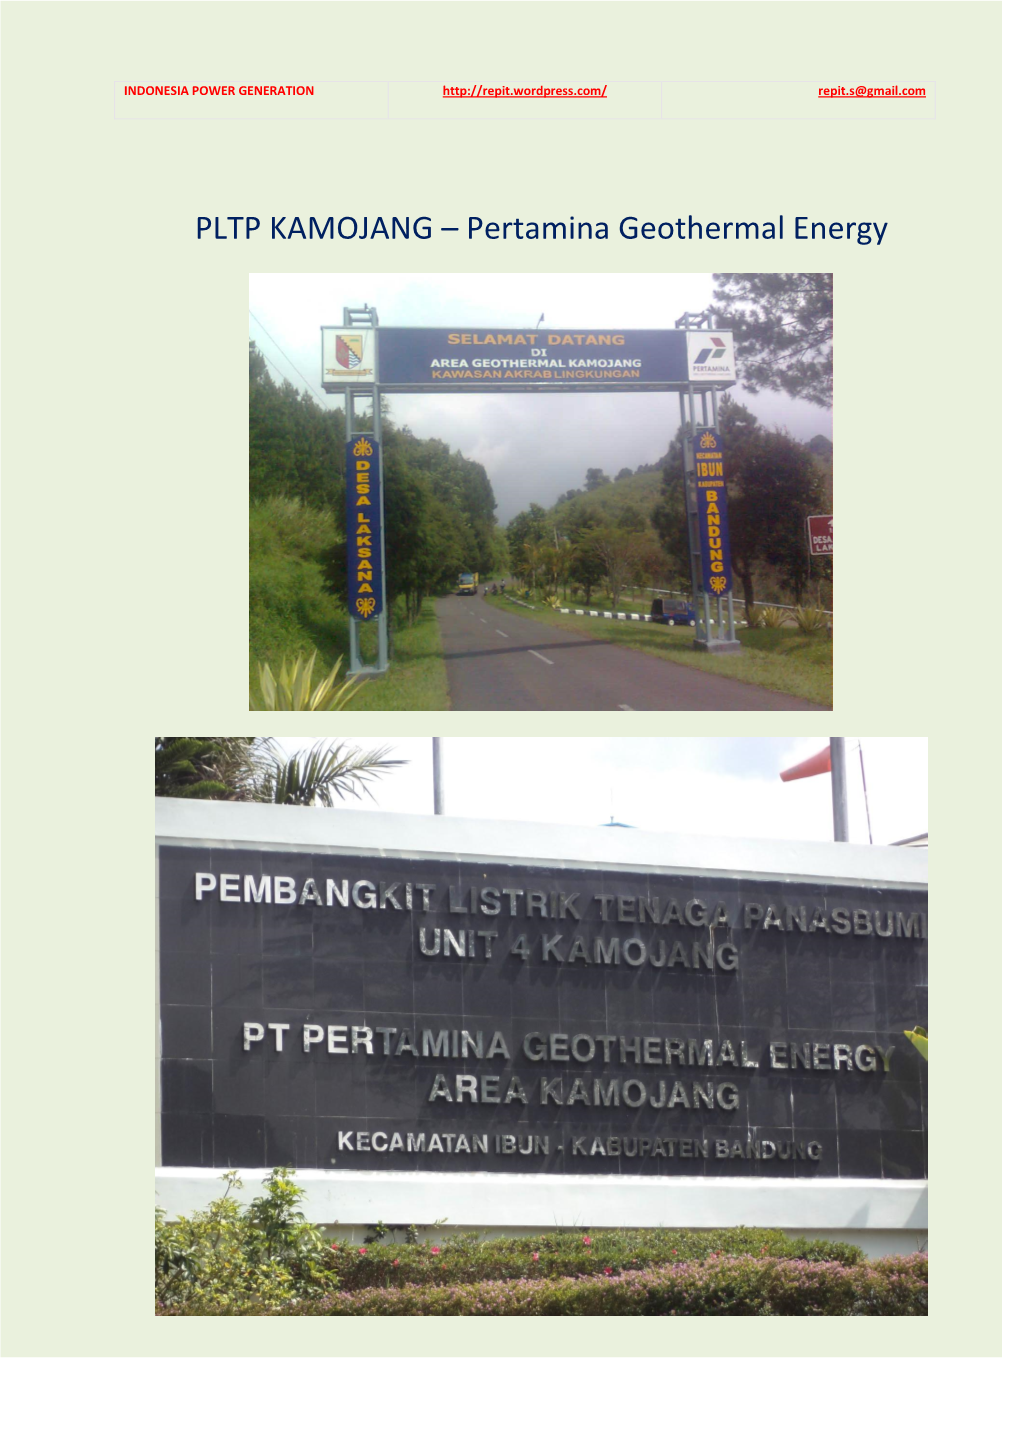 PLTP KAMOJANG – Pertamina Geothermal Energy